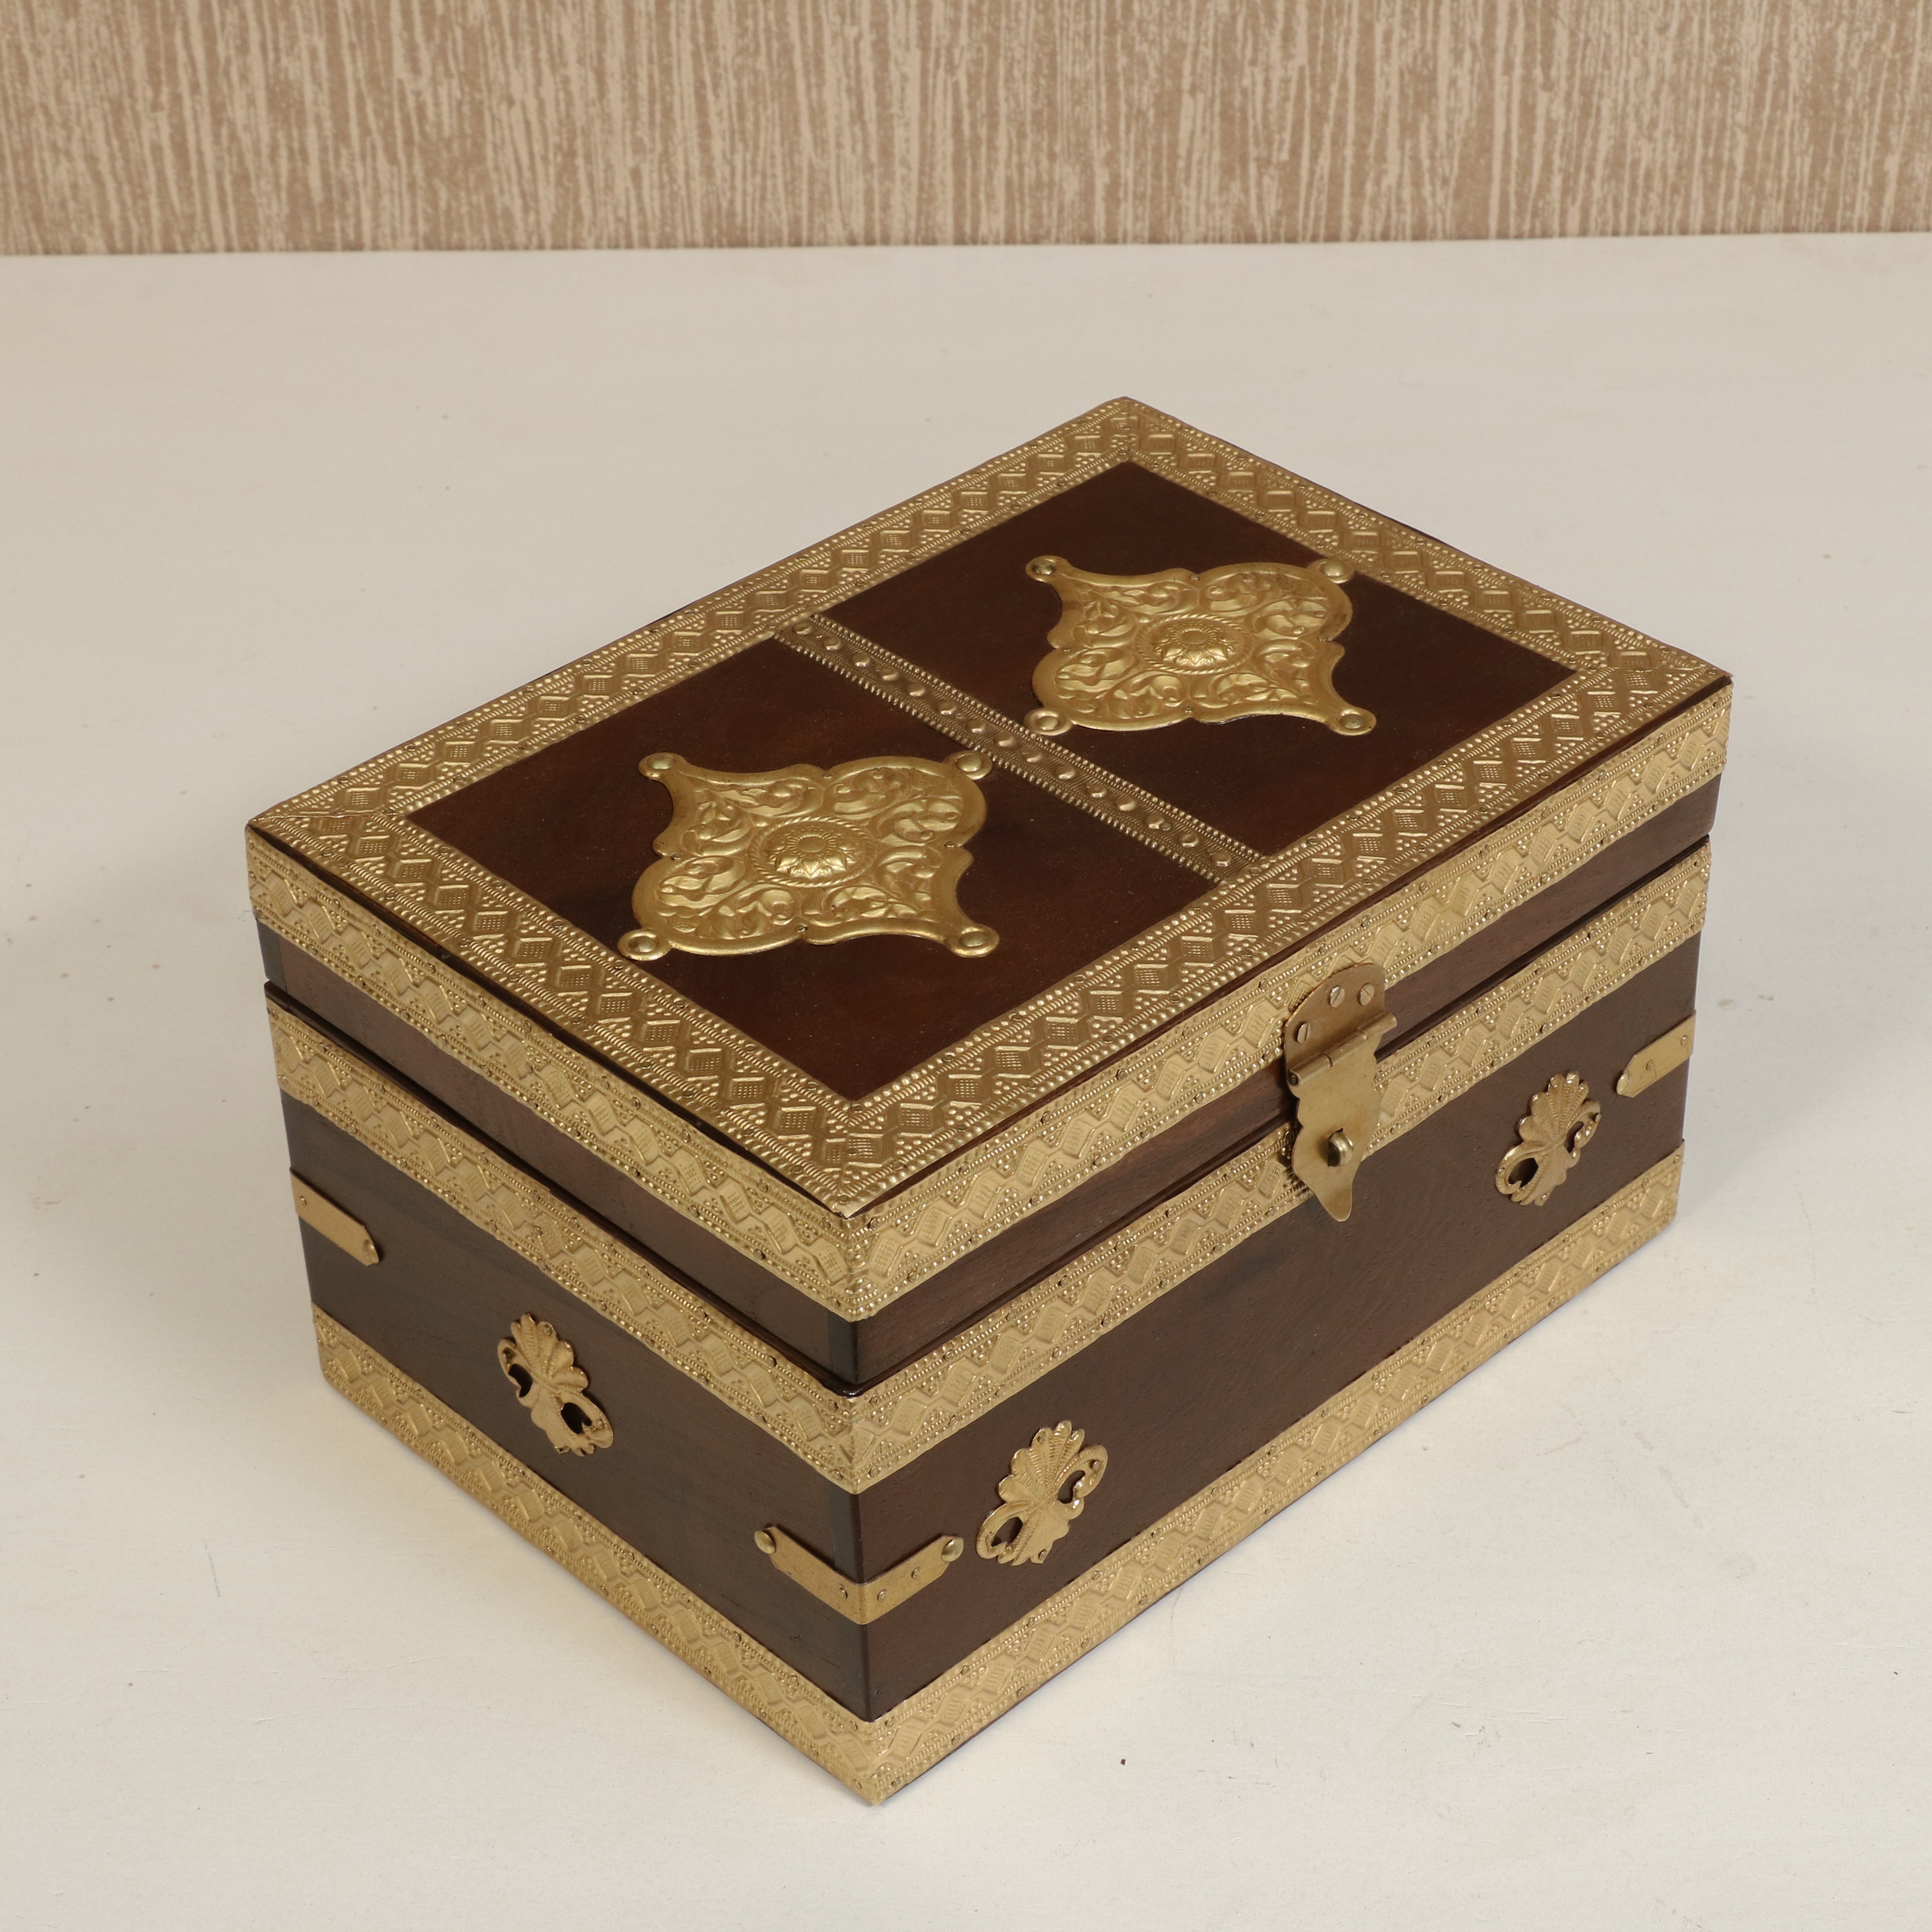 Antique Golden Brass Fitted Wooden Handmade Jewellery Box Wooden Box